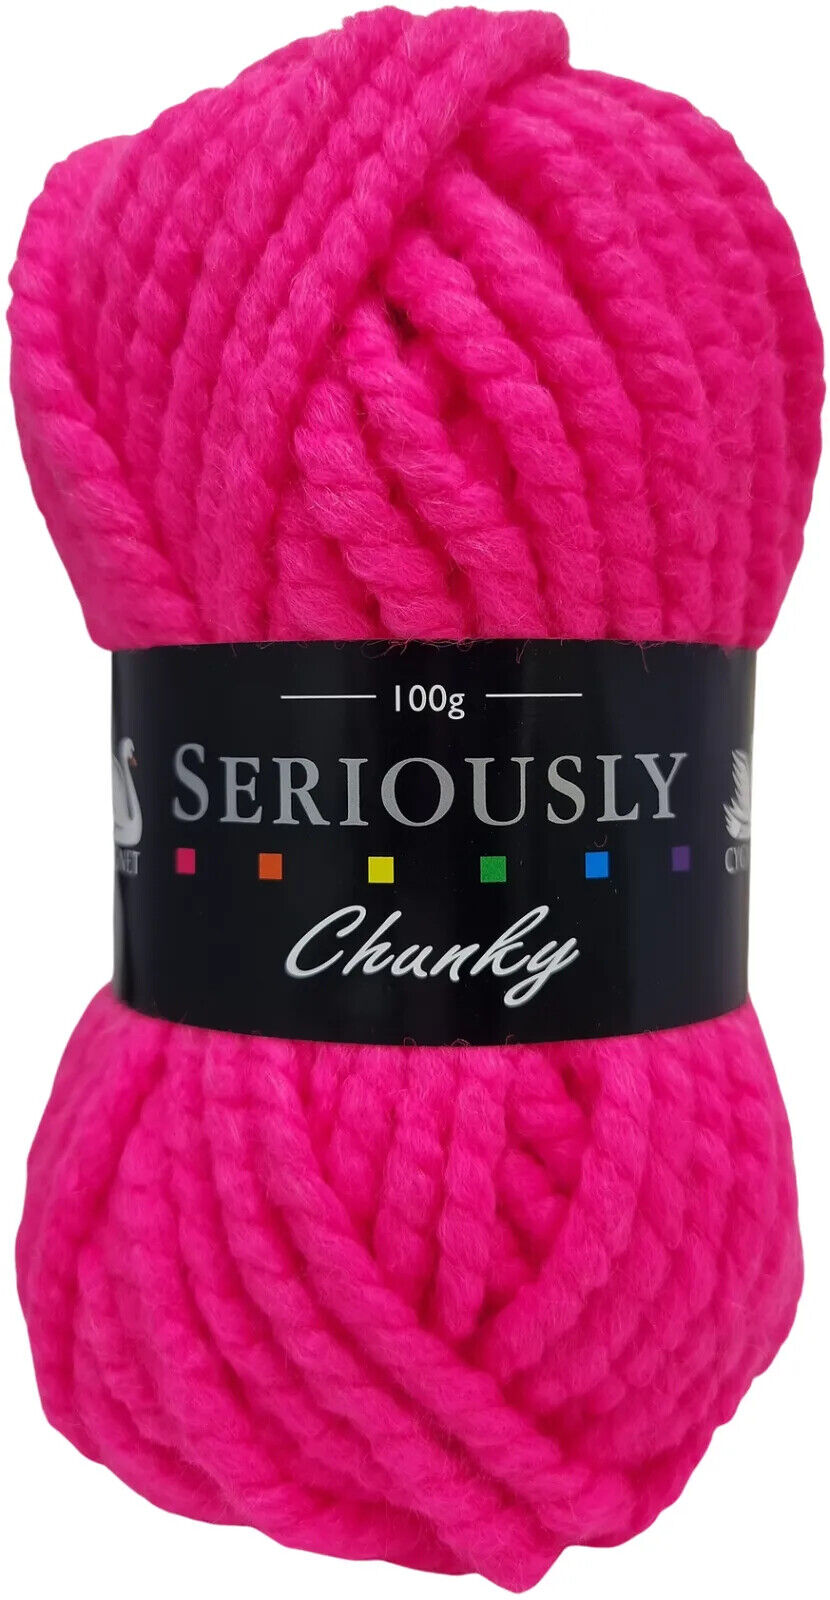 Cygnet SERIOUSLY CHUNKY Plains - Neon Pink 6534 Knitting Yarn